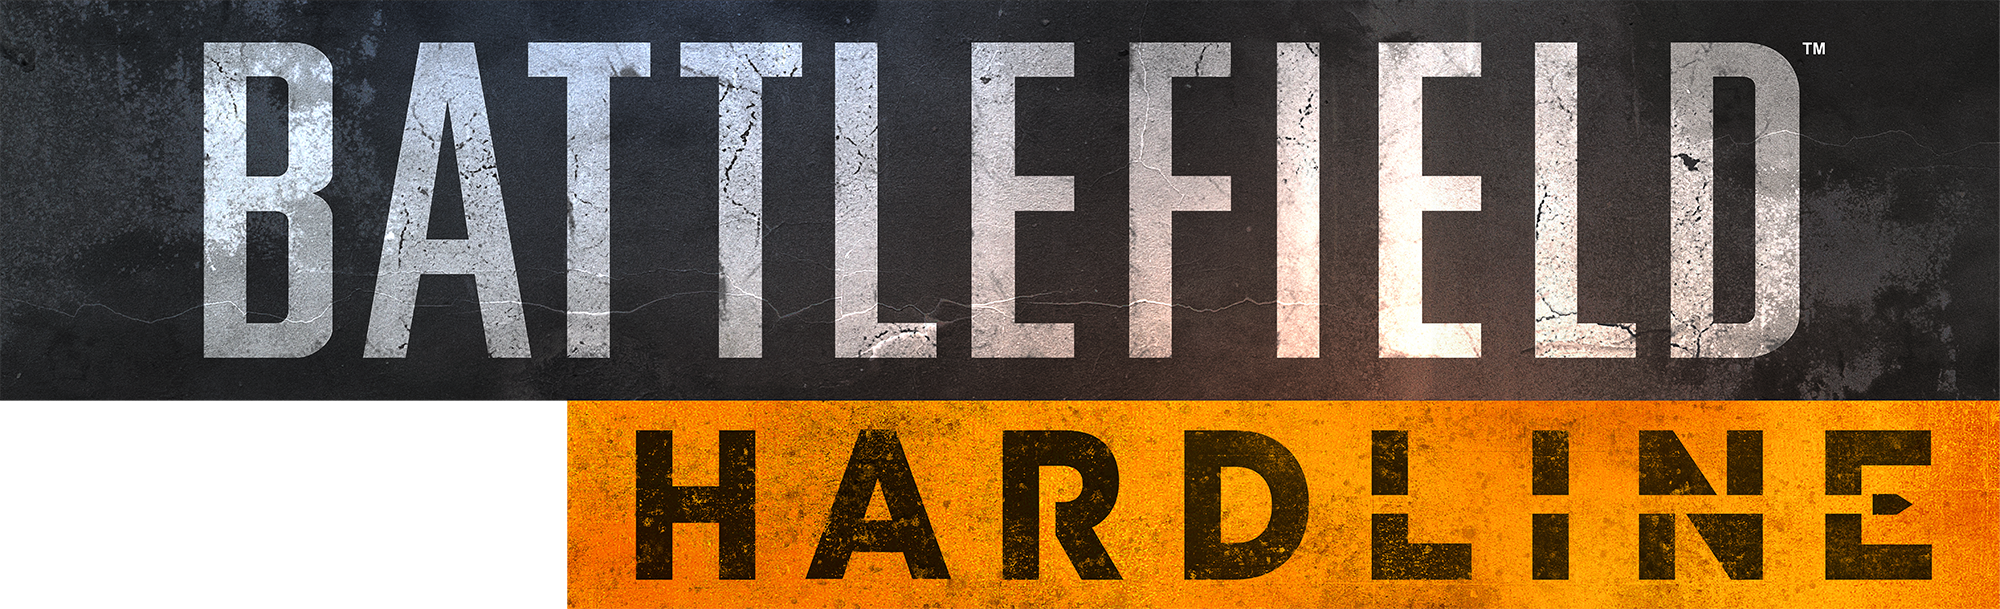 Battlefield Hardline Open Beta Coming In February - Battlefield Hardline, Transparent background PNG HD thumbnail